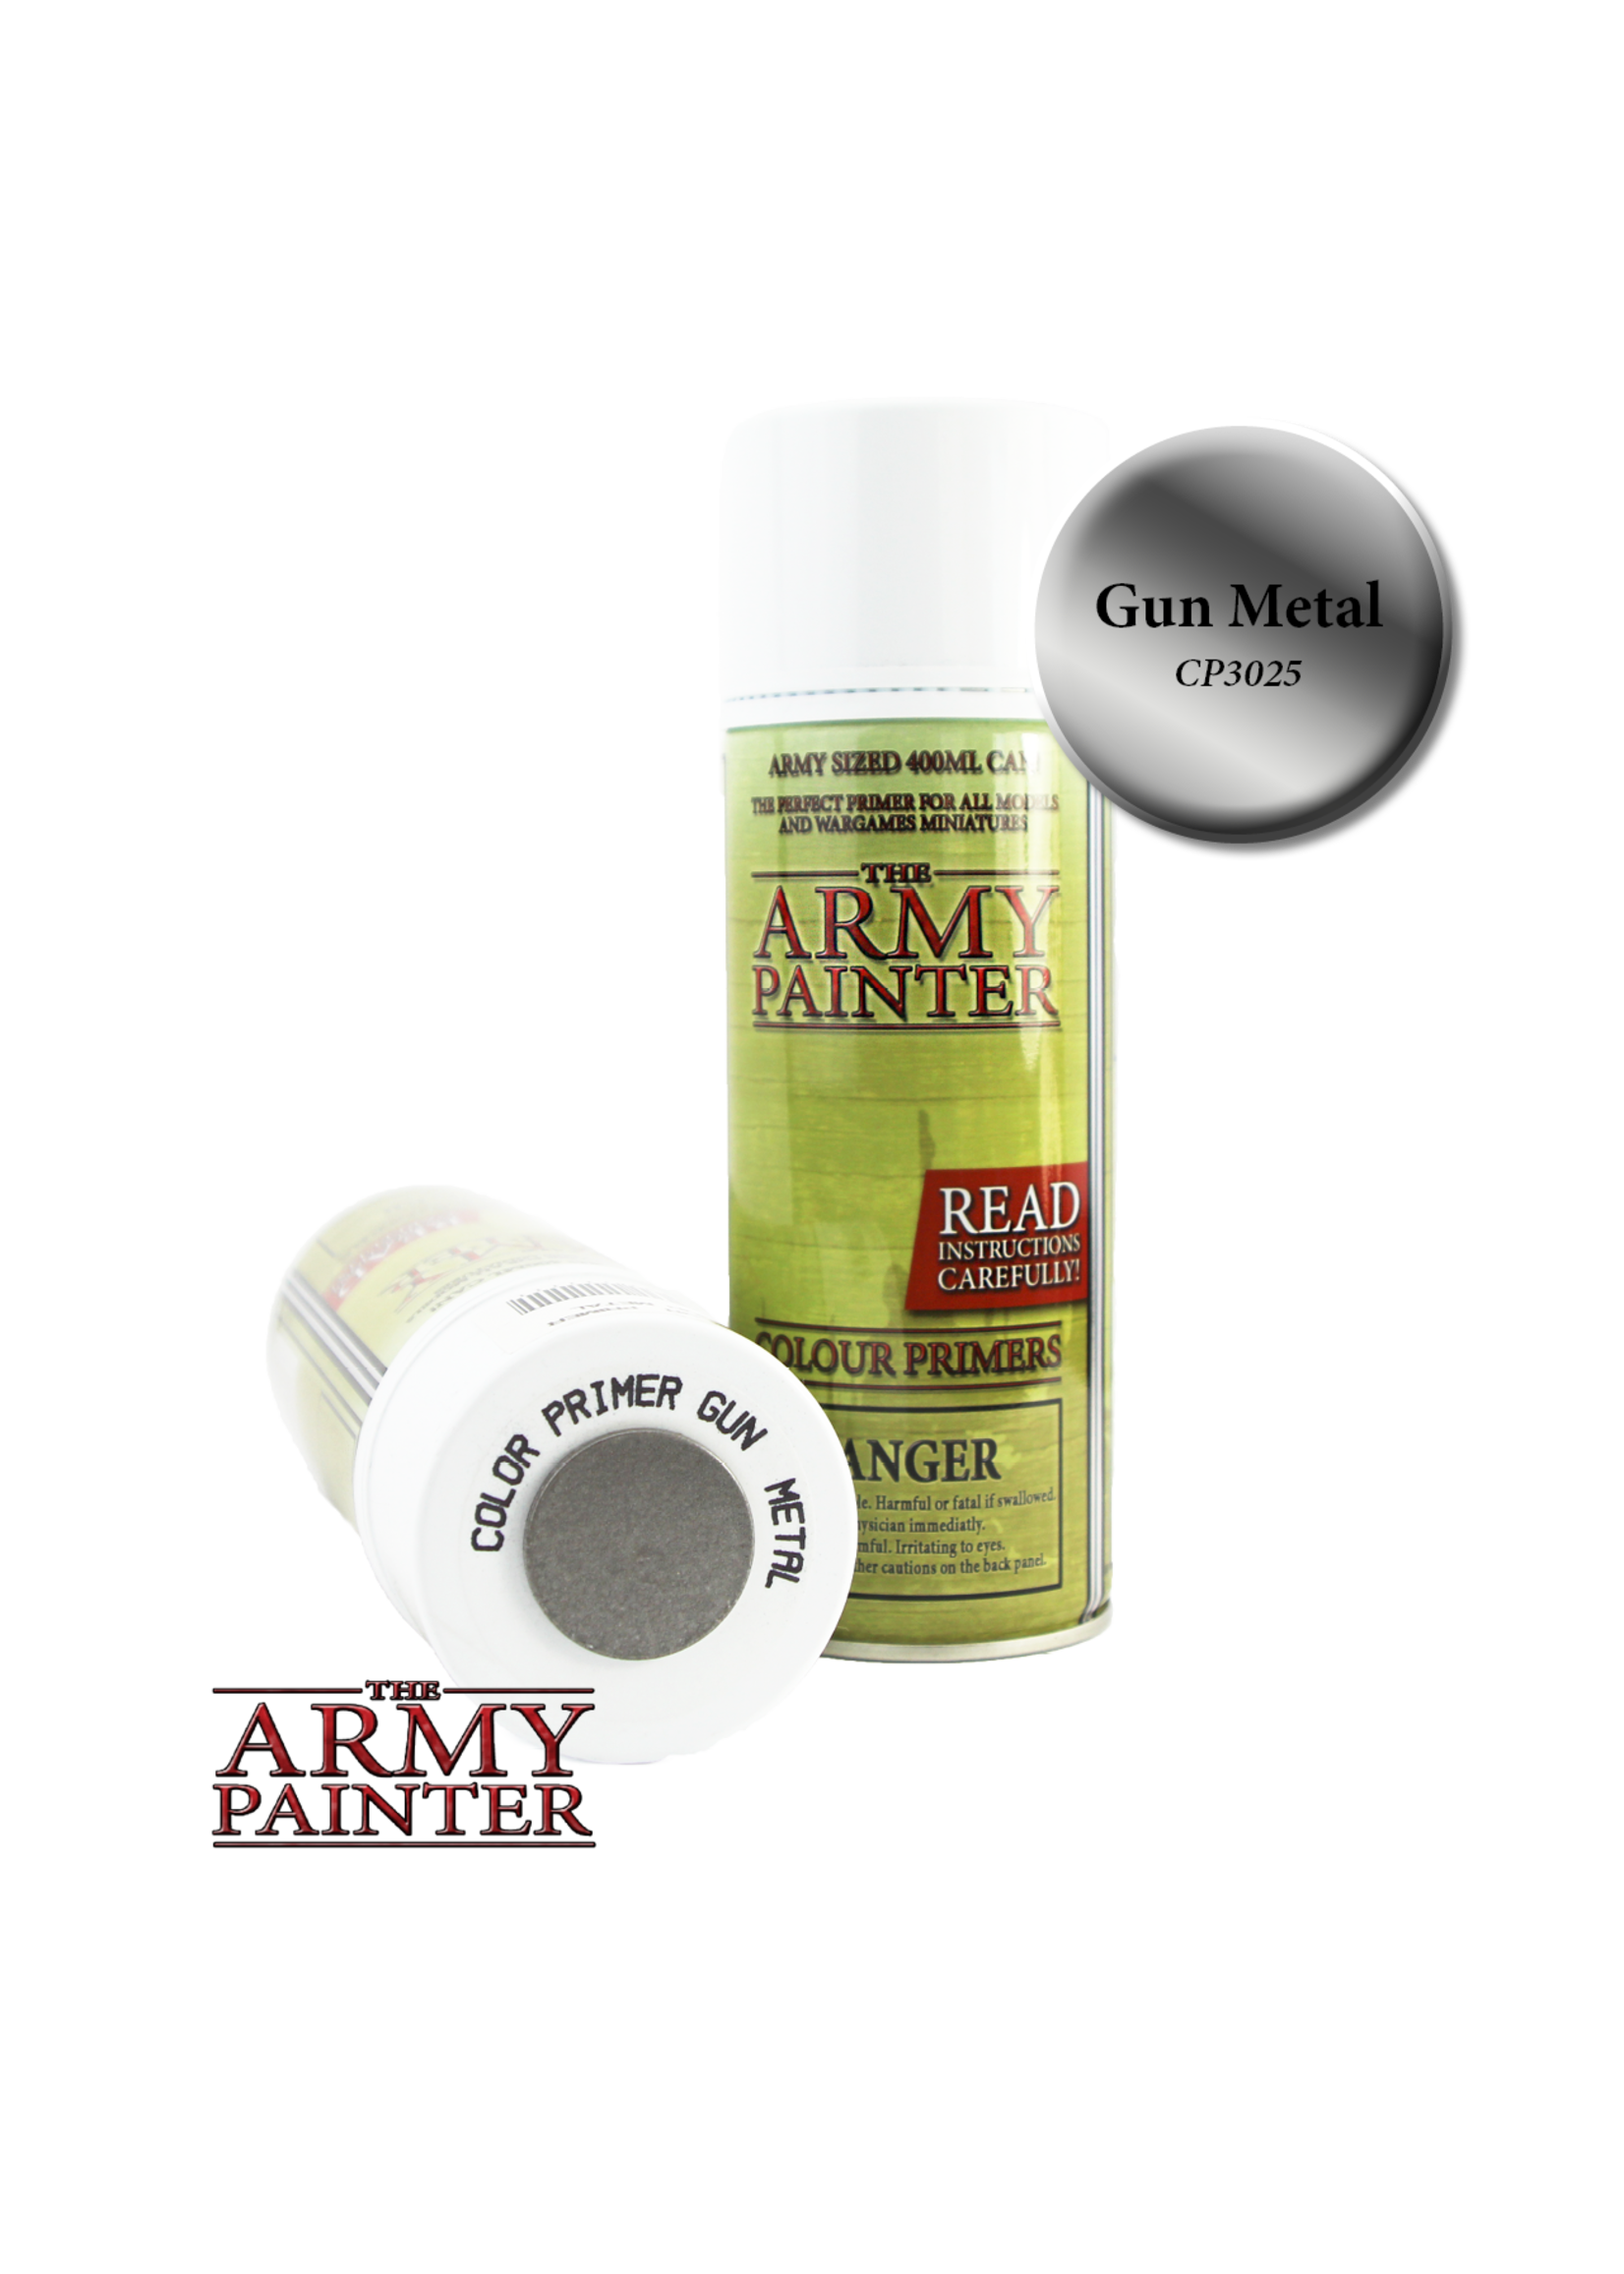 The Army Painter Colour Primers Gun Metal